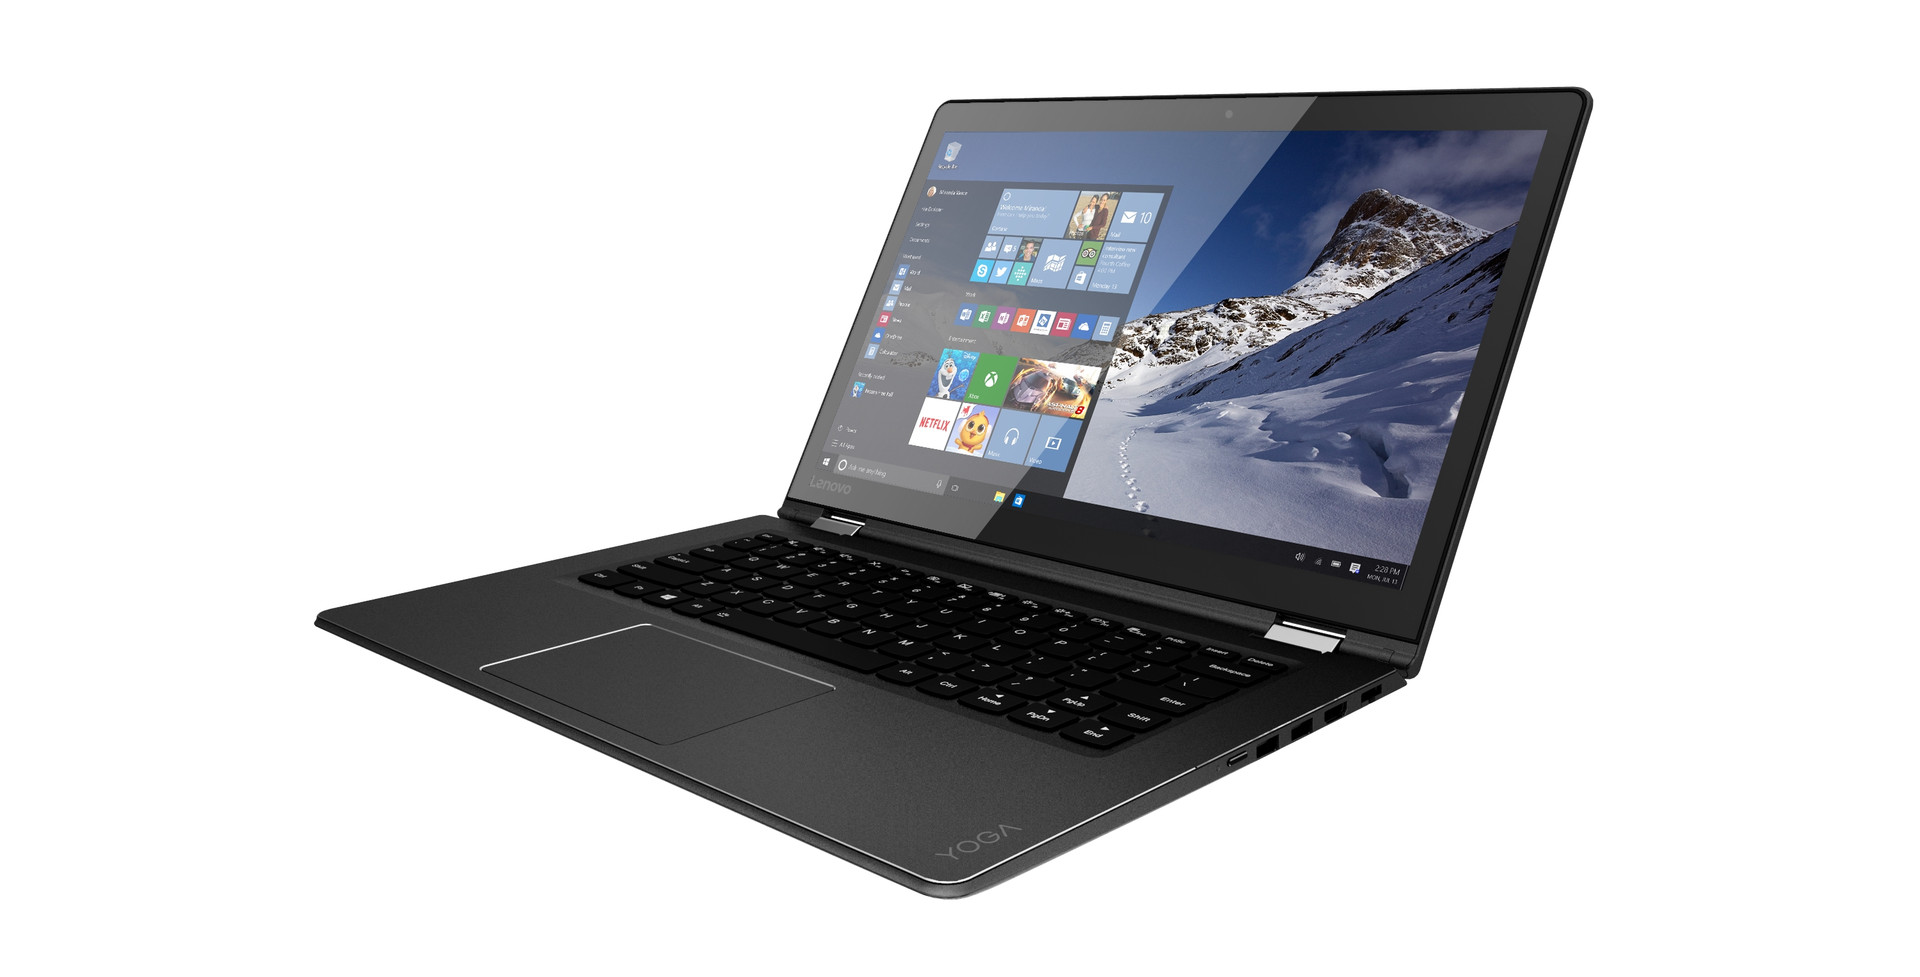 Lenovo Yoga 510 Series - Notebookcheck.net External Reviews